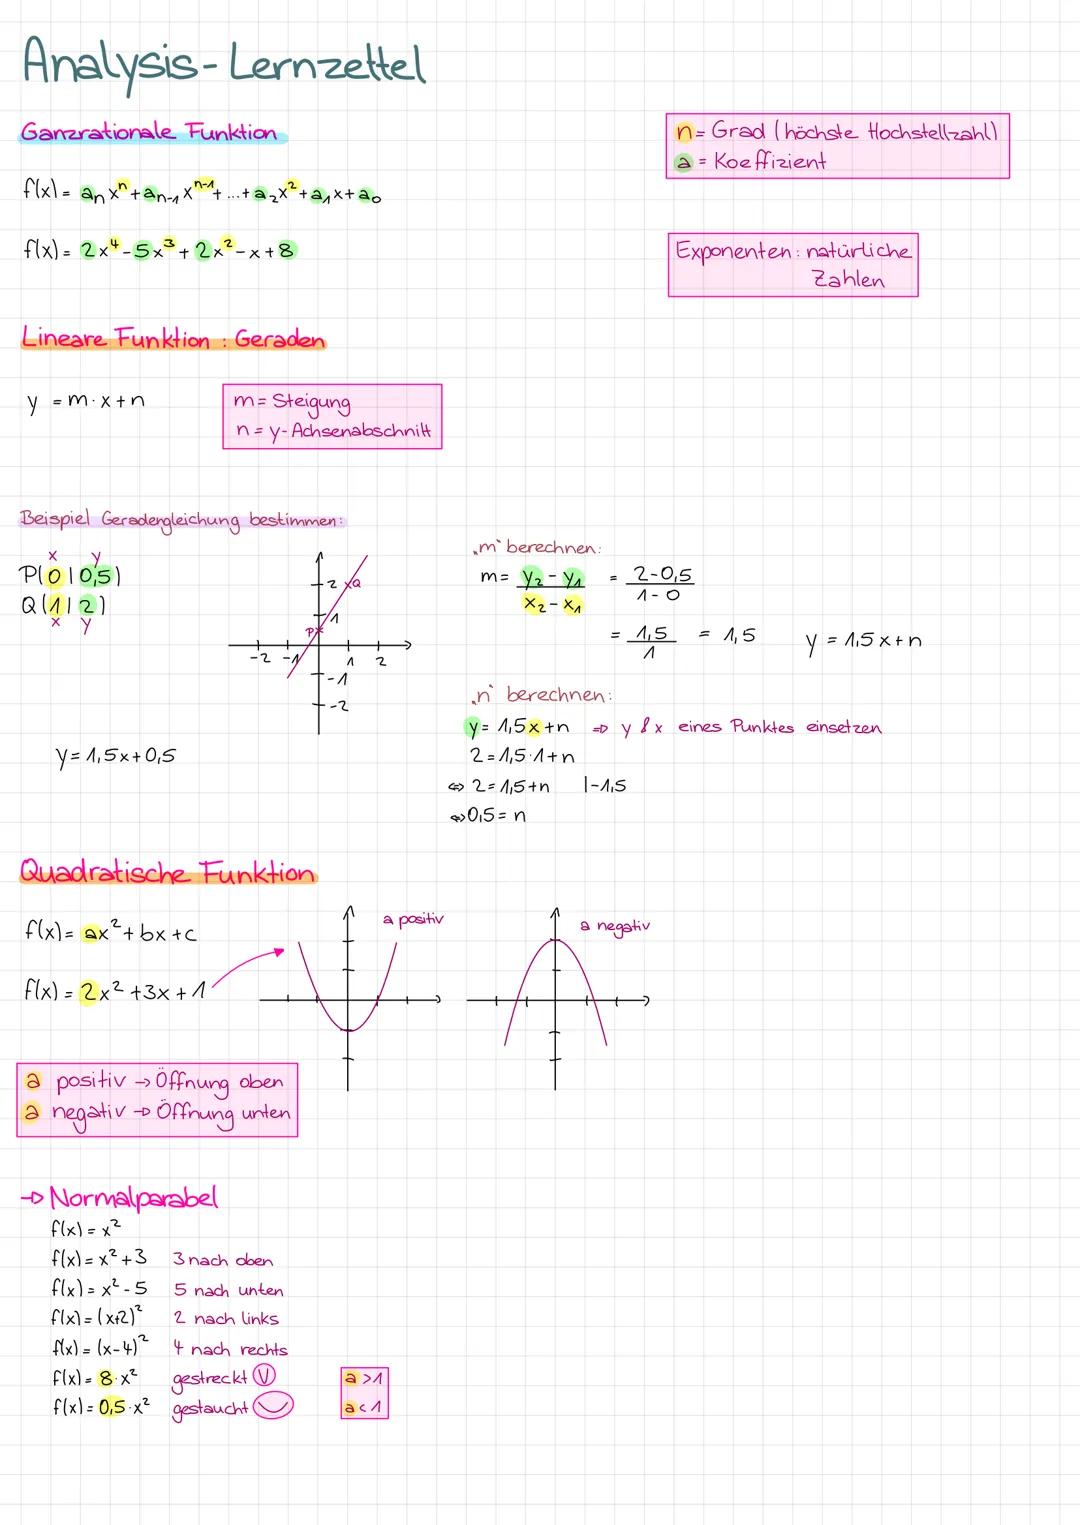 Analysis - Lernzettel
Ganzrationale Funktion
f(x) =
"+an-x-t.
f(x) = 2x4-5x³ + 2x²-x+8
y = m.x+n
Lineare Funktion: Geraden
X
Pl010,51
Q(112)